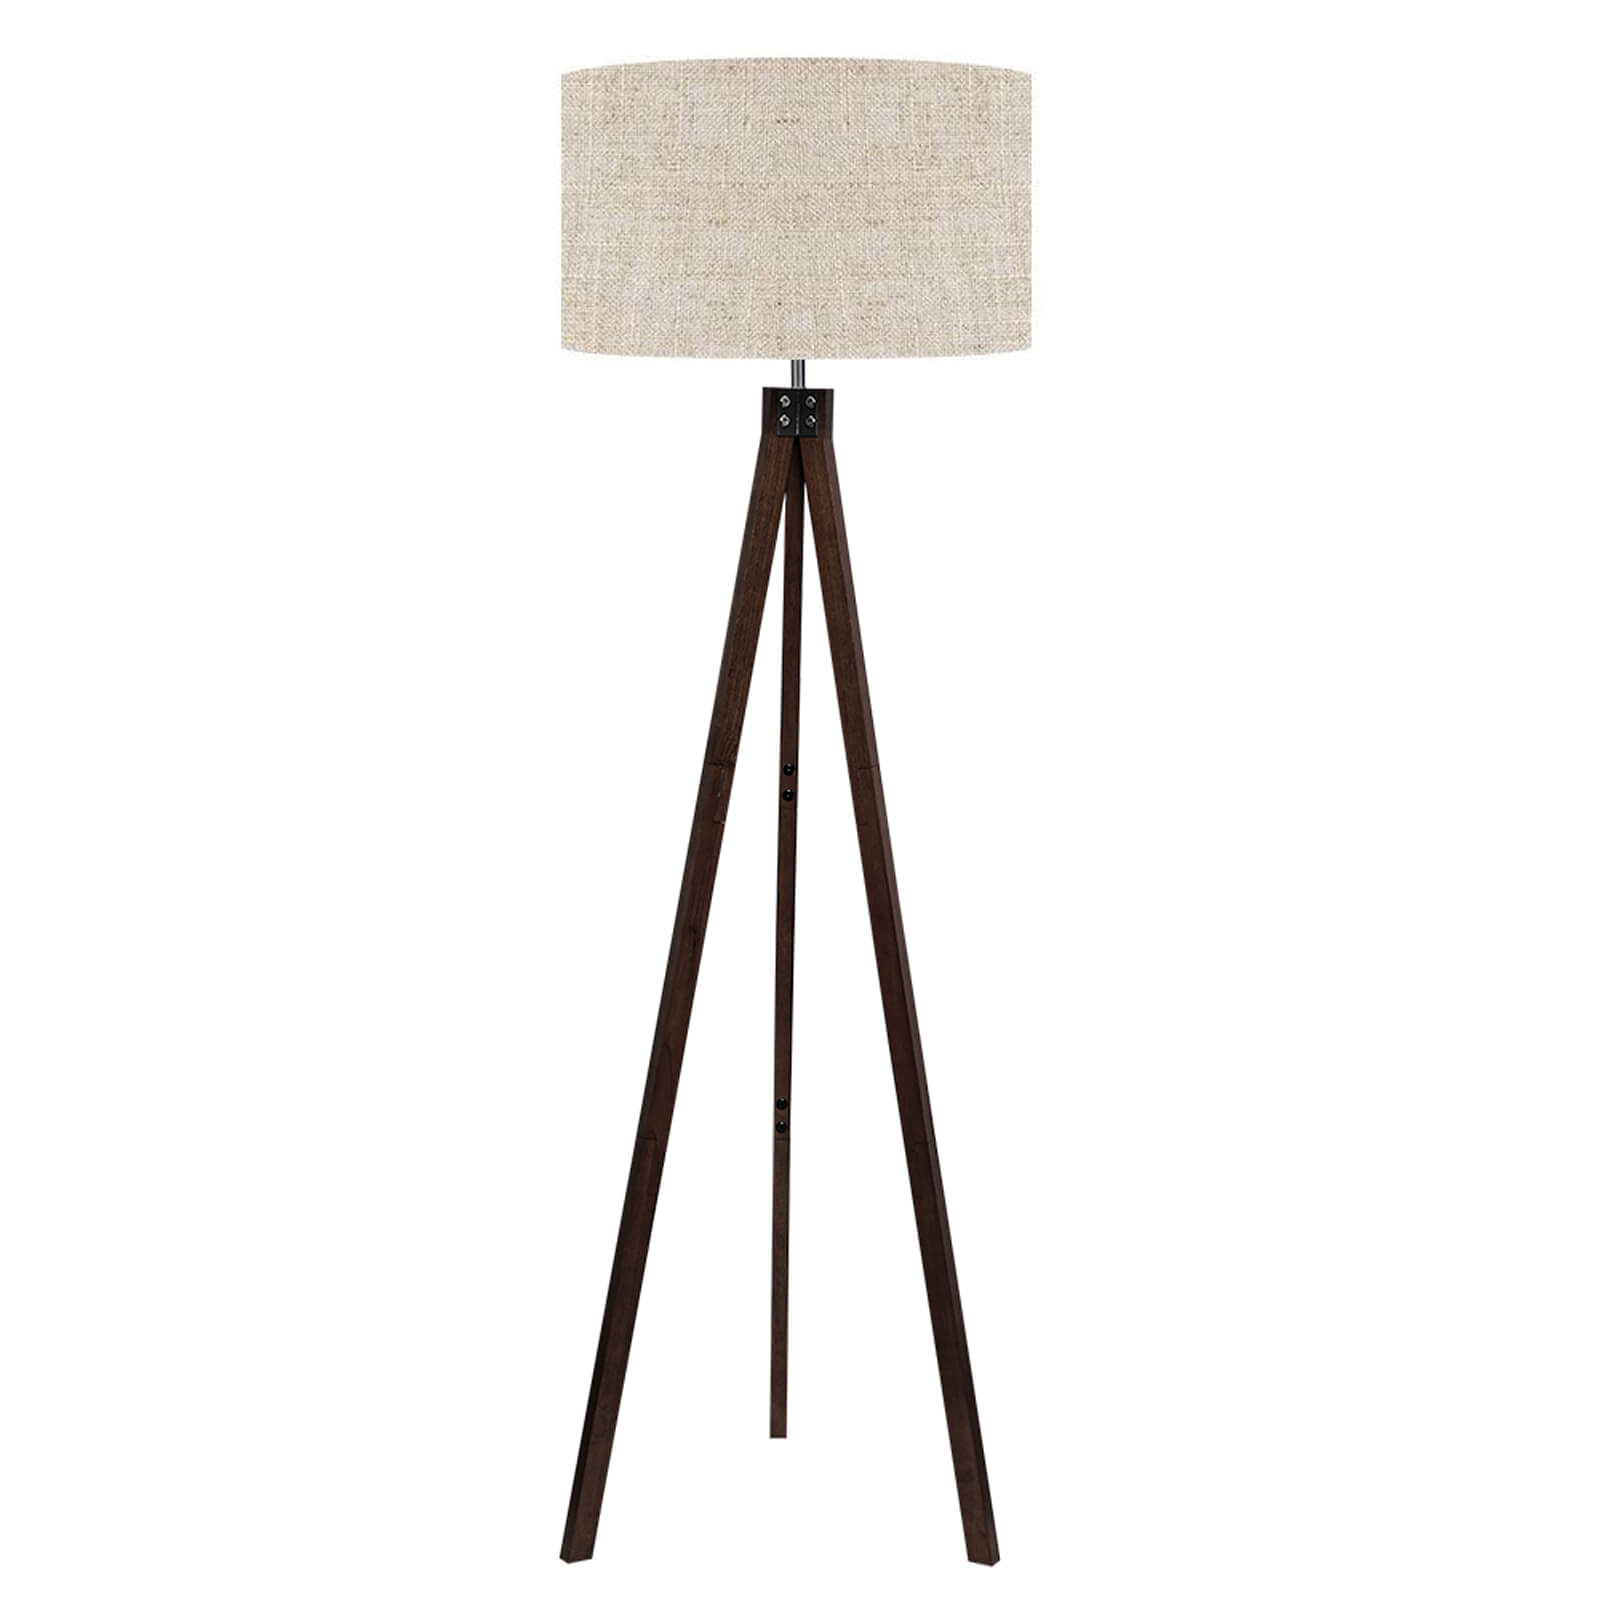 Wooden Tripod Floor Lamp with 3 Leg